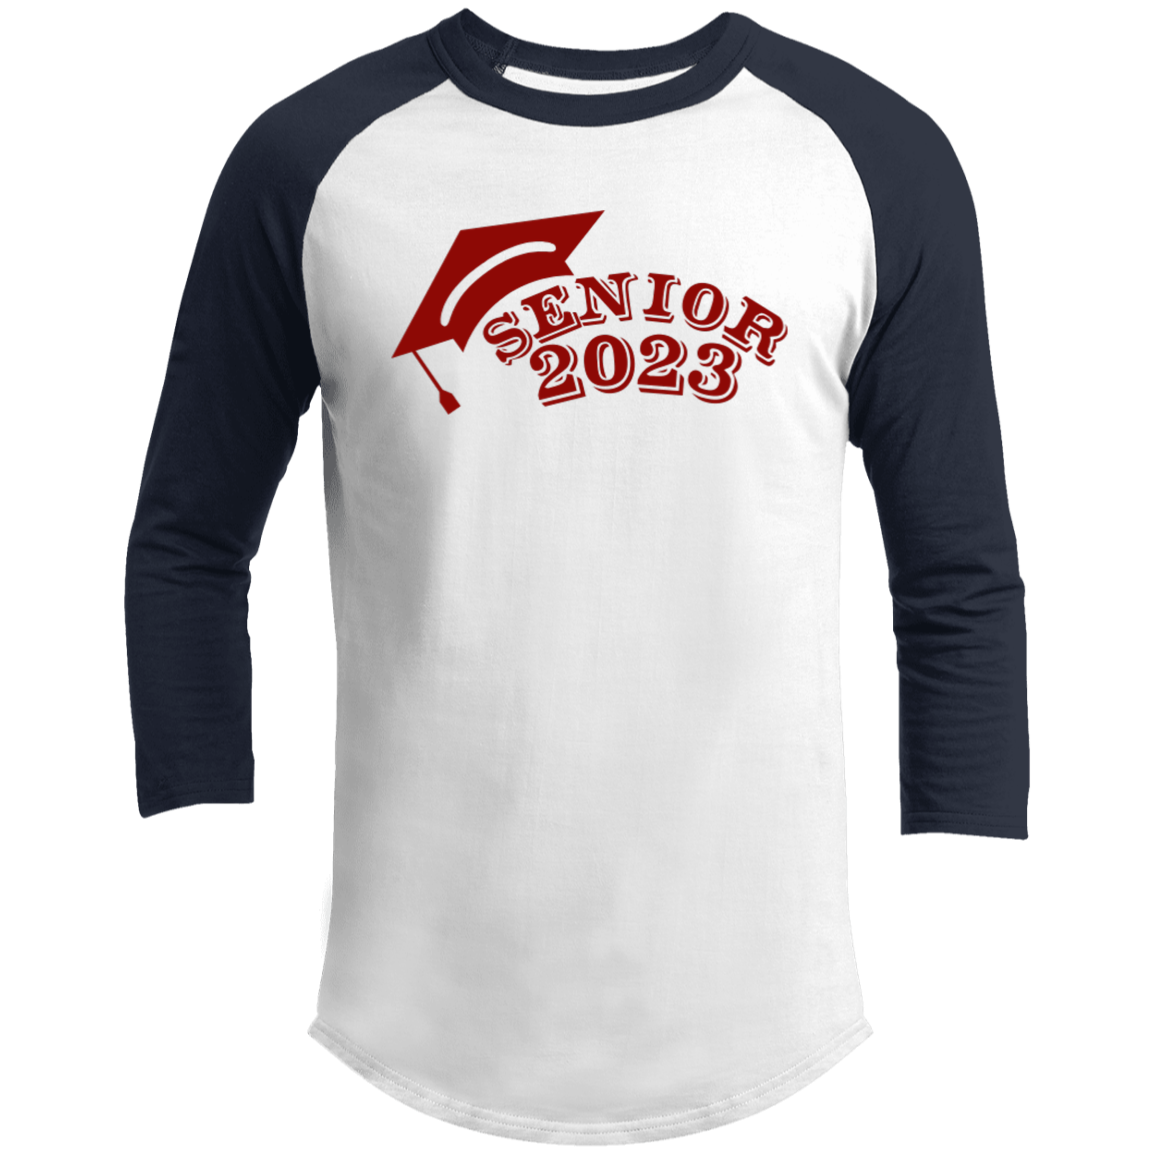 2023 Red 3/4 Raglan Sleeve Shirt